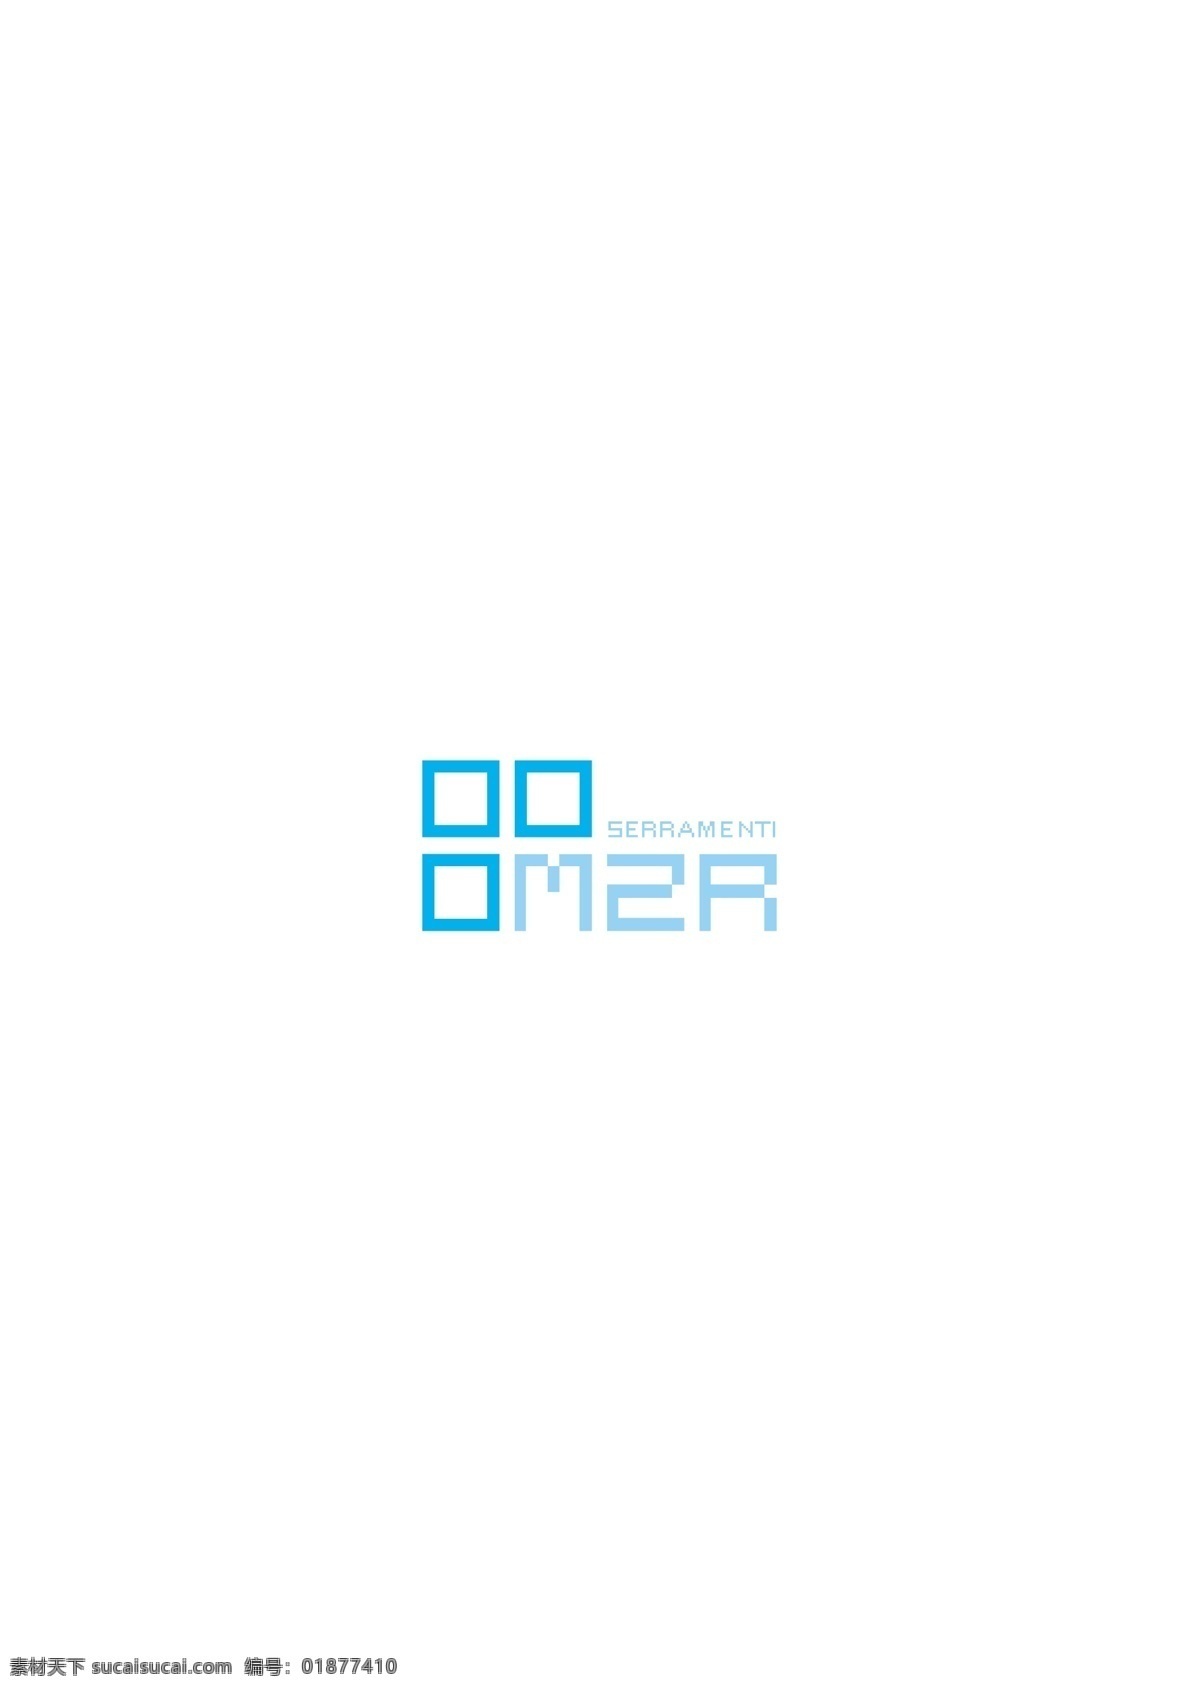 m2r logo大全 logo 设计欣赏 商业矢量 矢量下载 化工业 标志 标志设计 欣赏 网页矢量 矢量图 其他矢量图